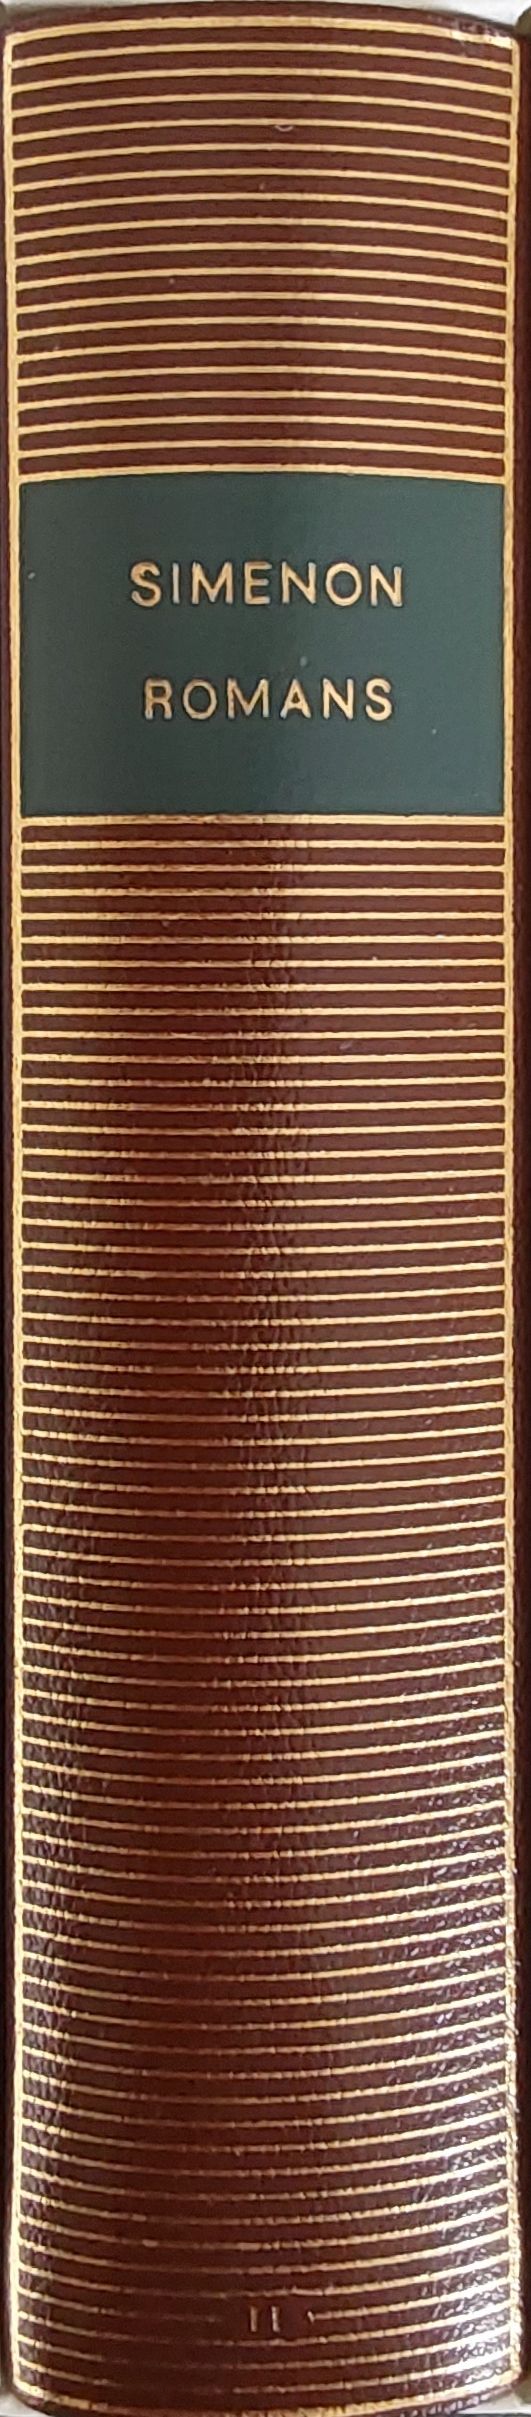 Volume 496 de Simenon dans la Bibliothèque de la Pléiade.